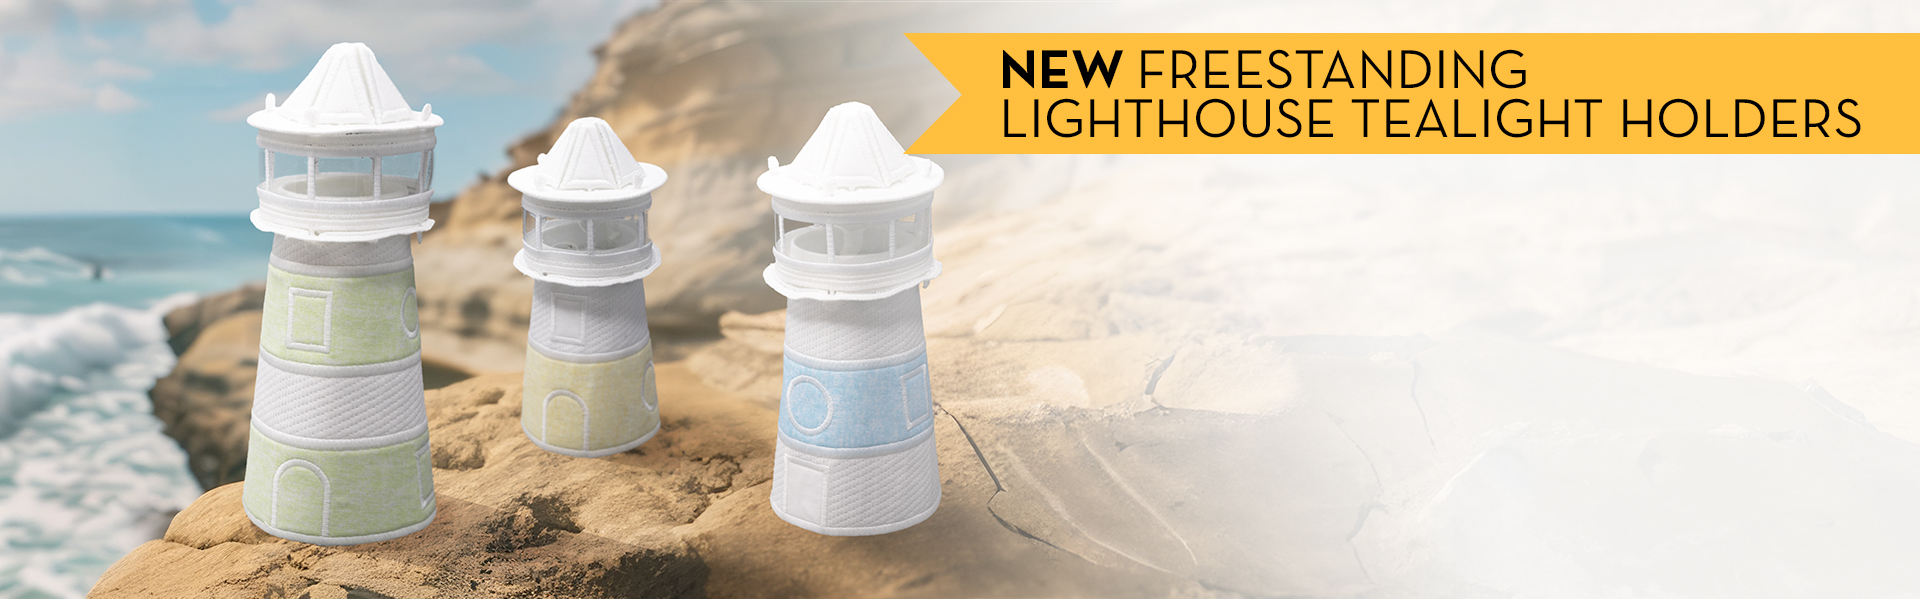 Freestanding Lighthouse Tealight Holders